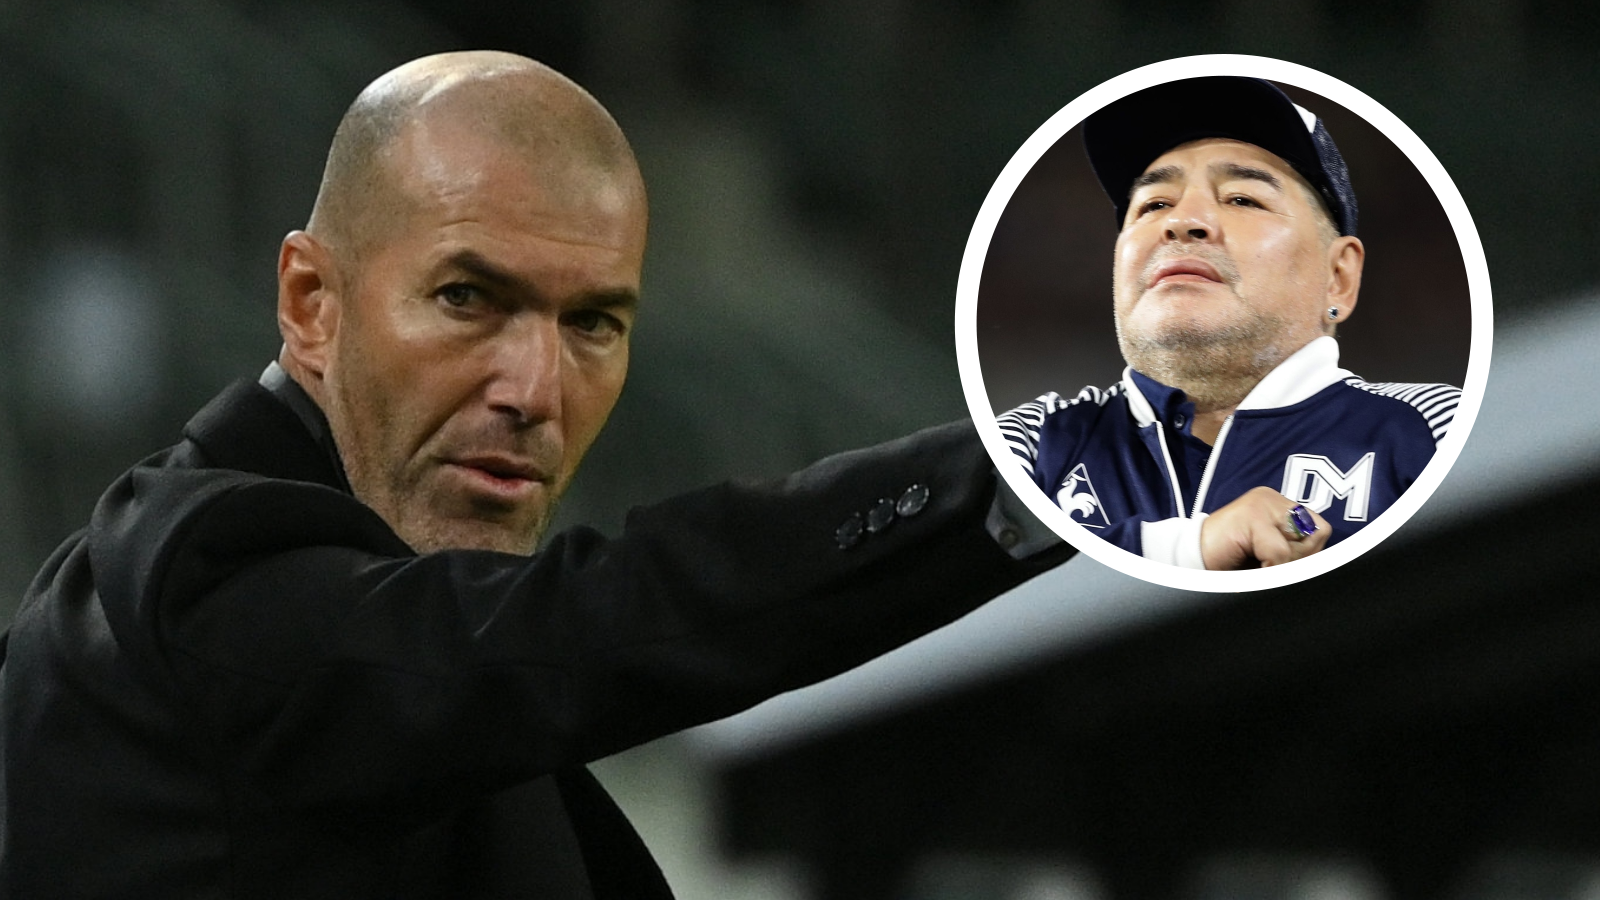 I have Maradona engrained in my head' - Zidane in emotional